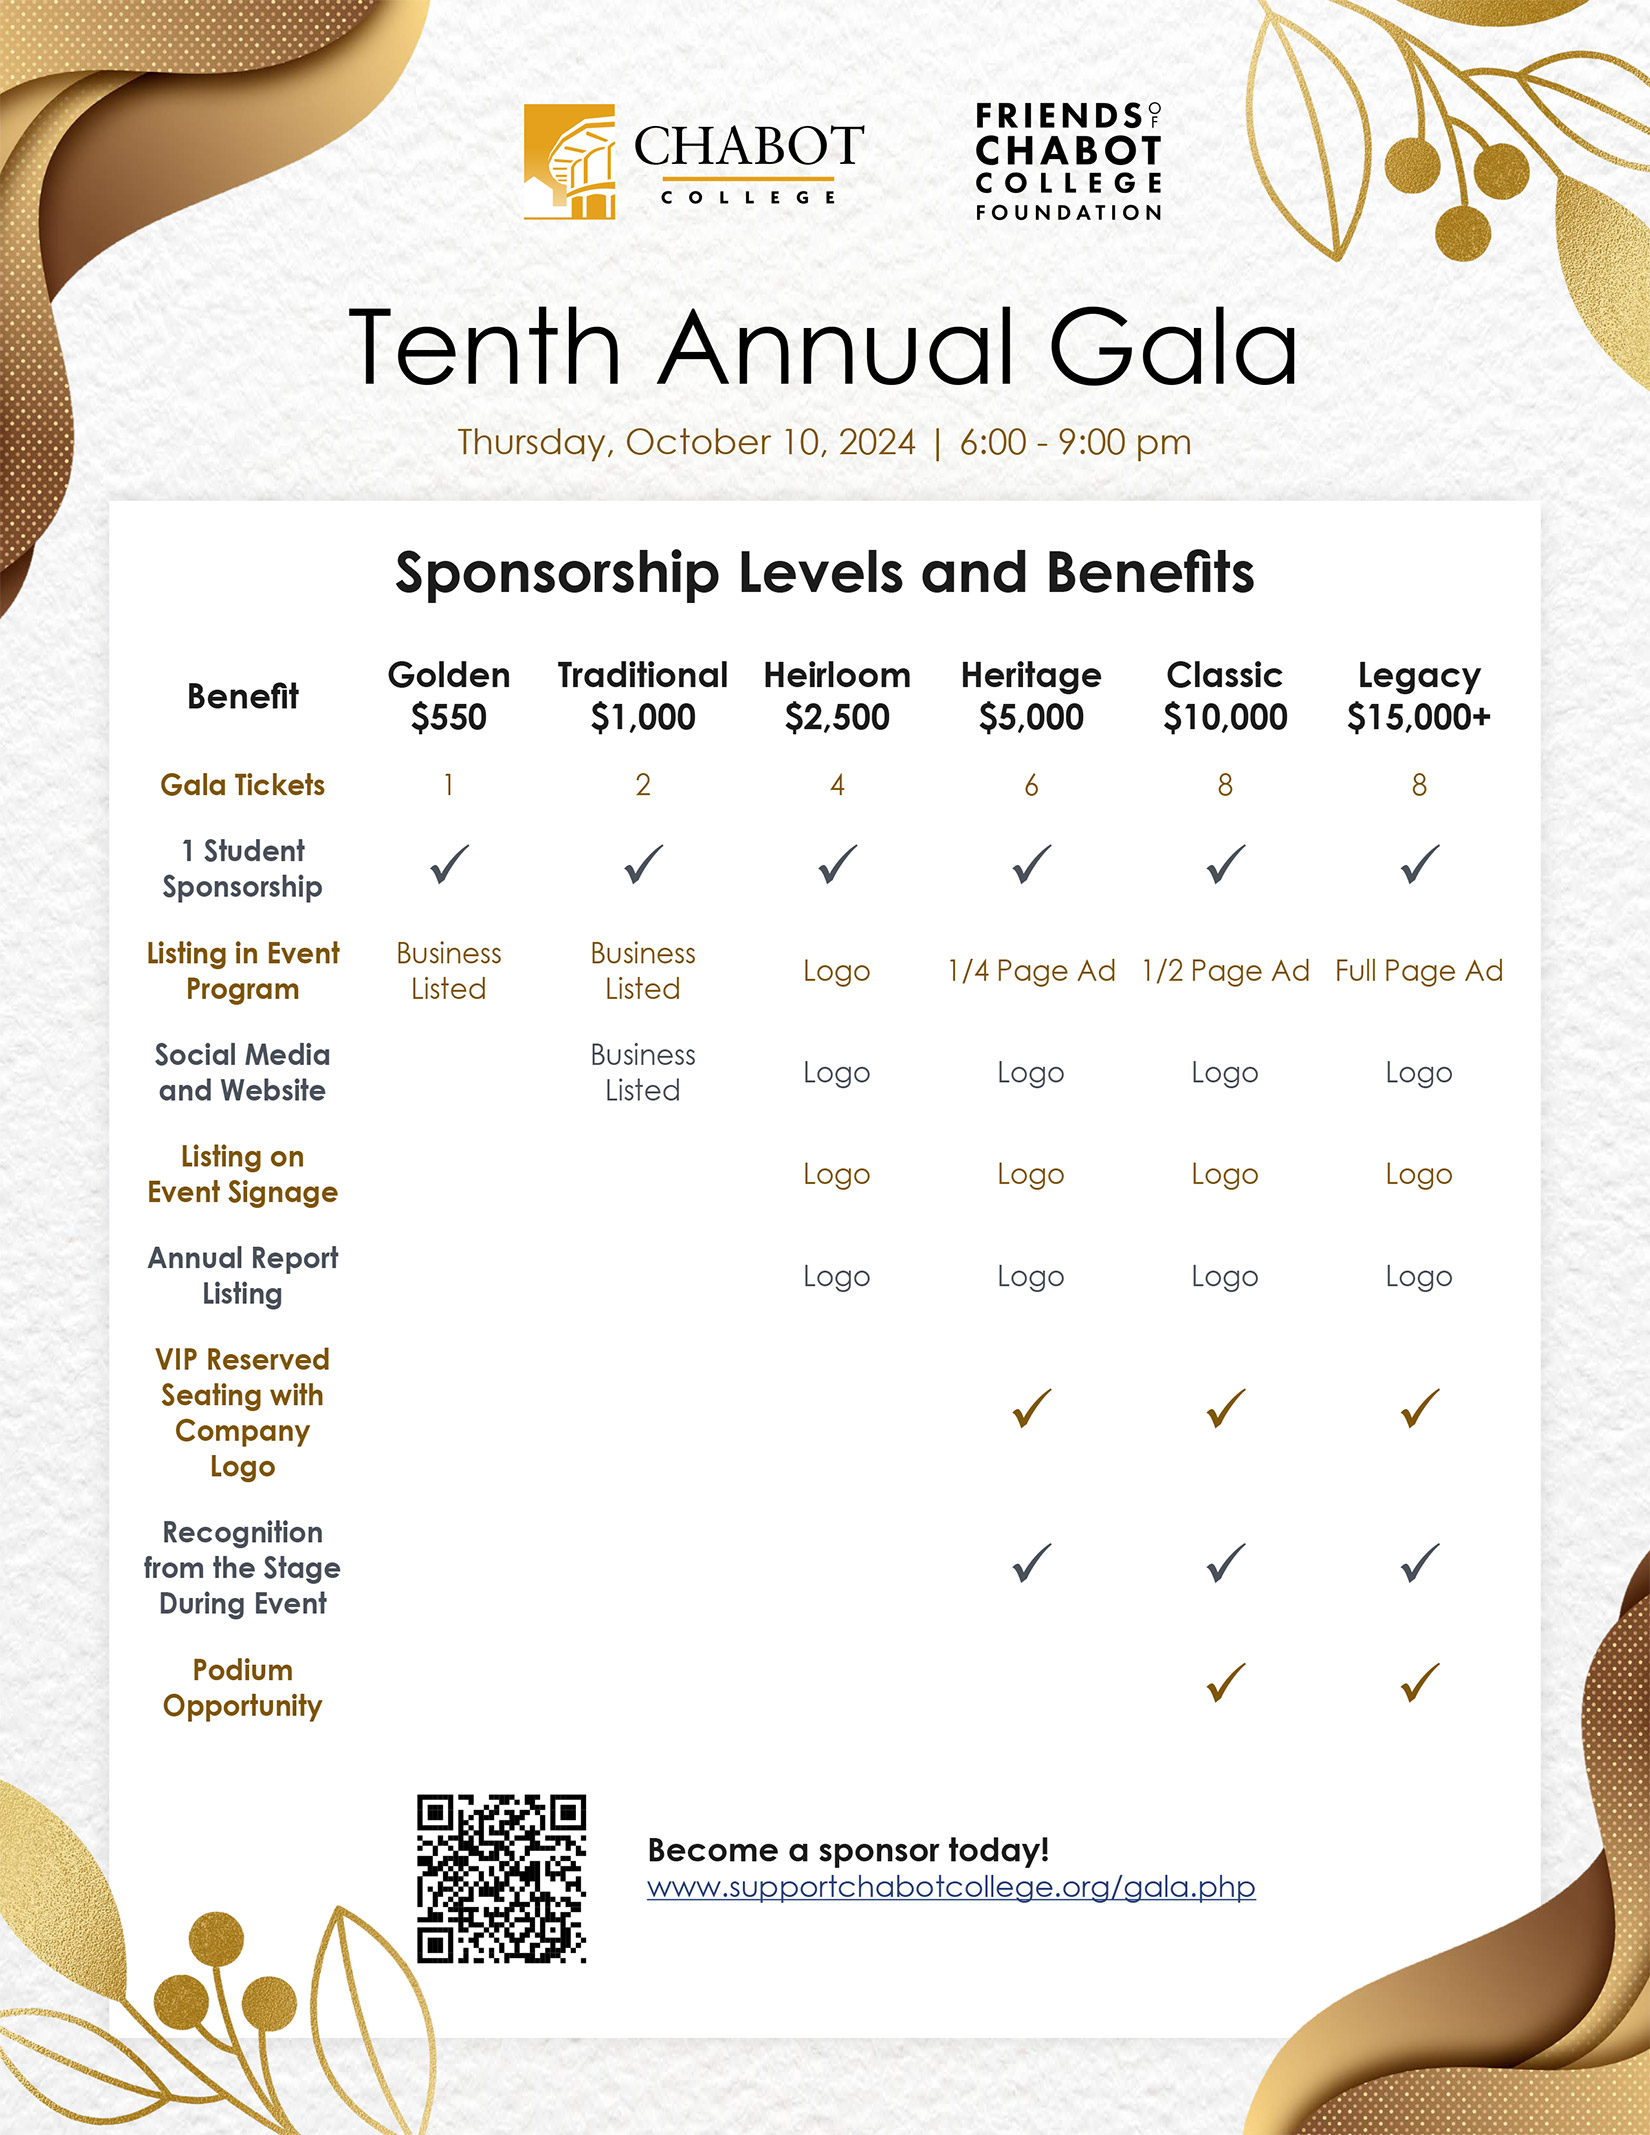 Sponsorship Levels and Benefits